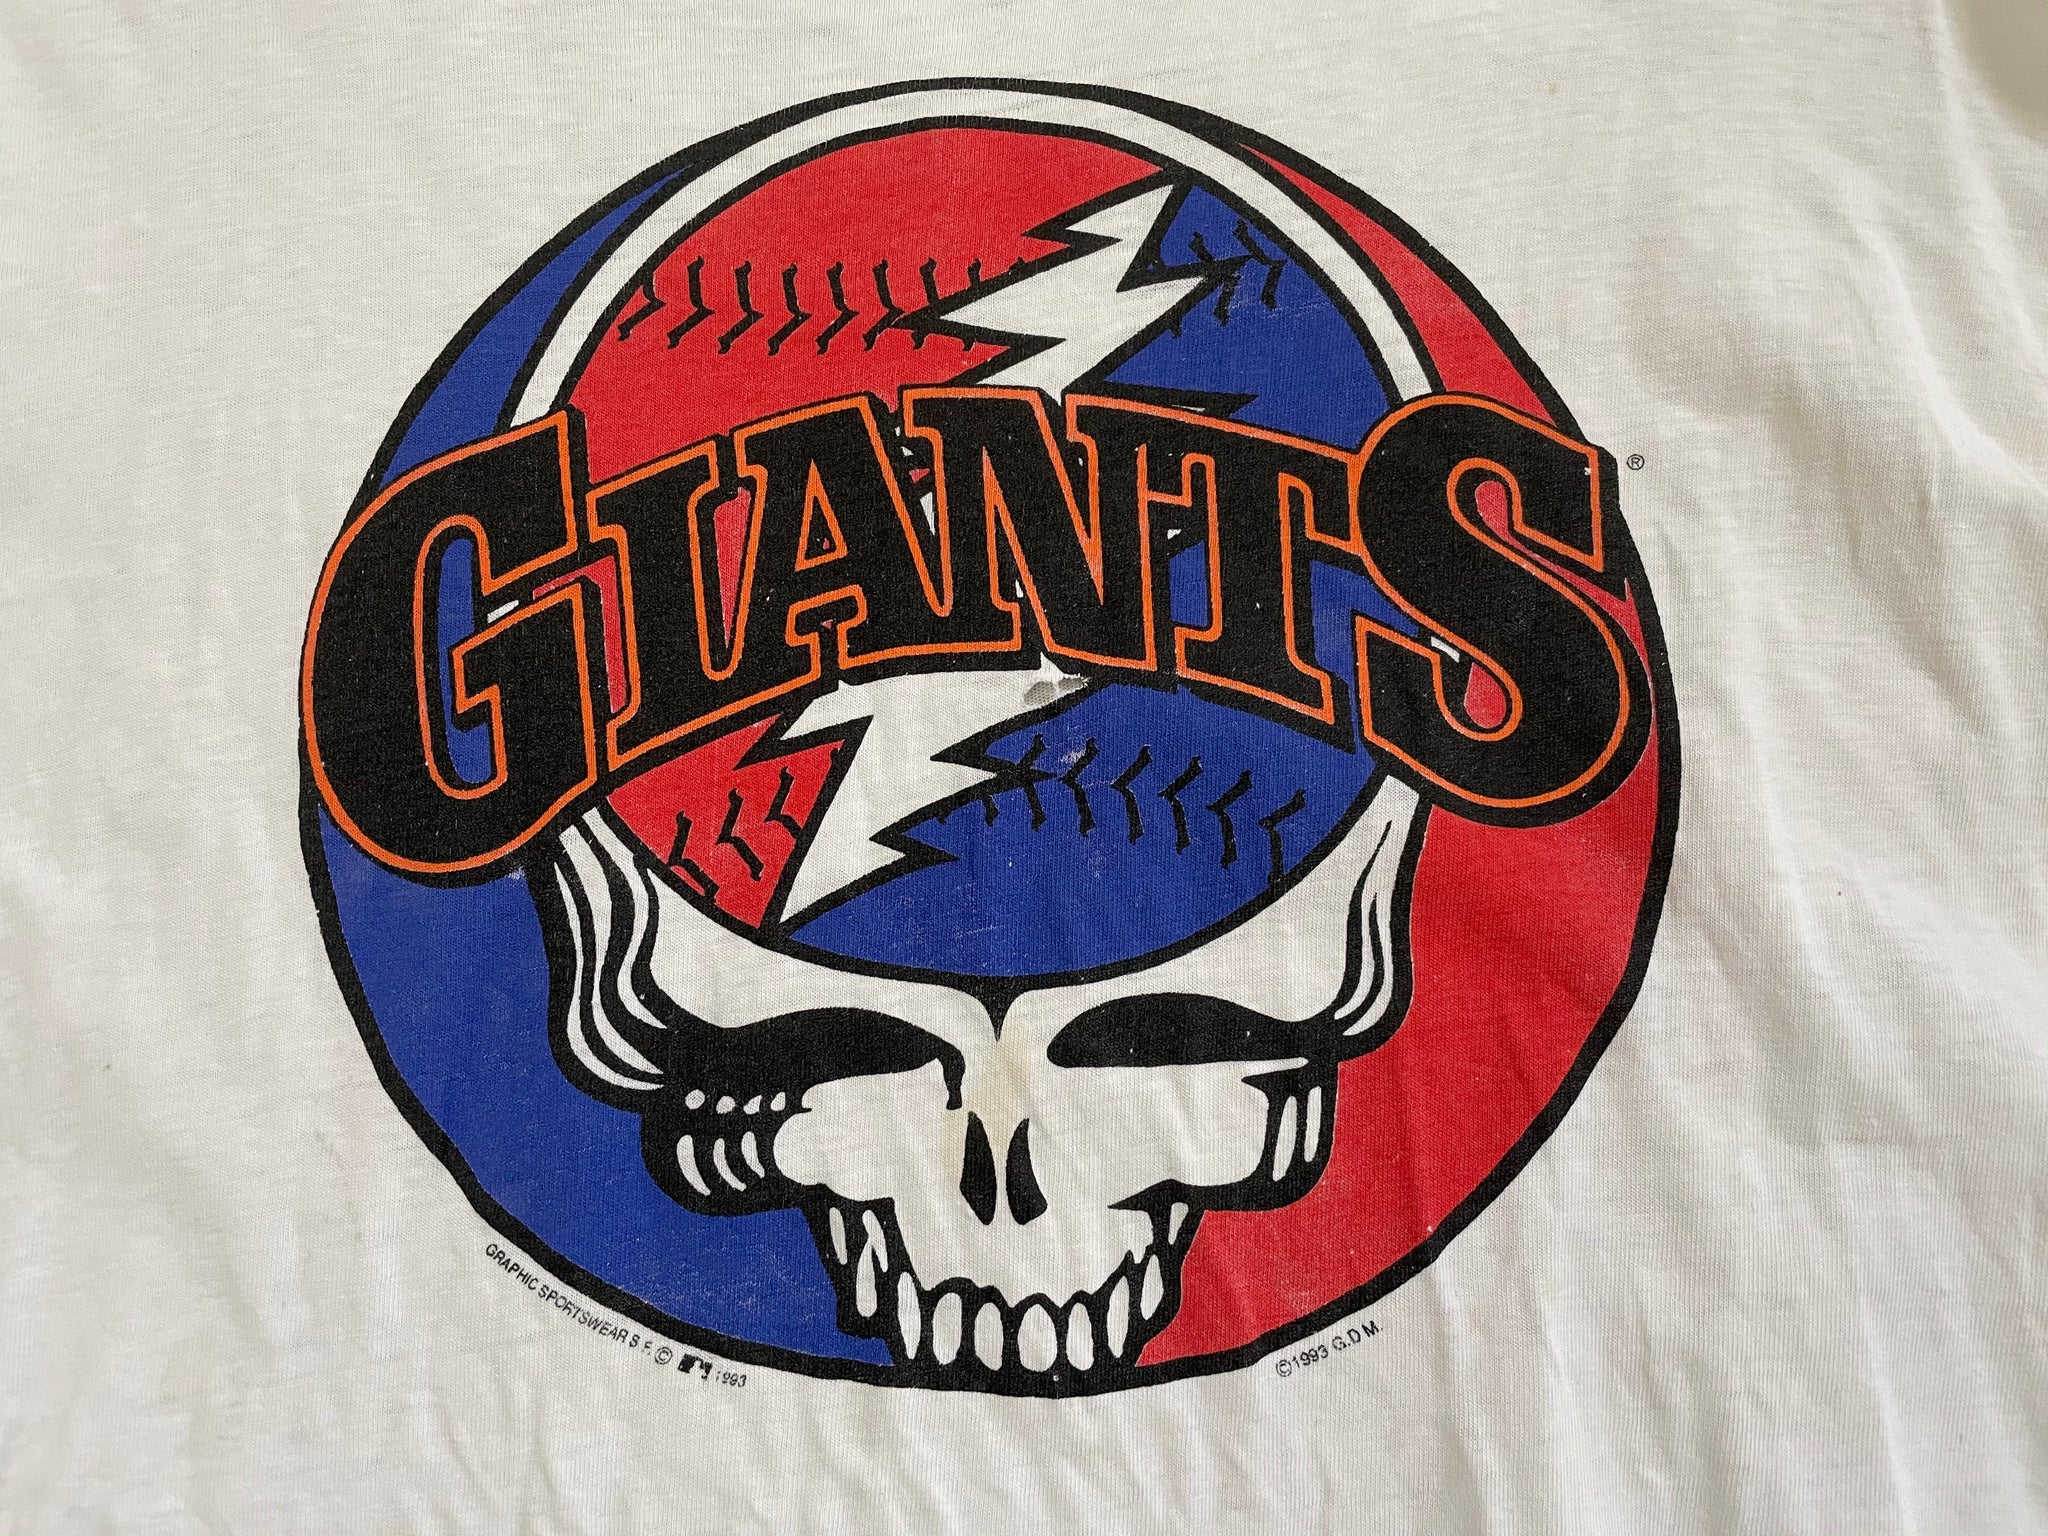 San Francisco Giants MLB Baseball Jeffy Dabbing Sports T Shirt For